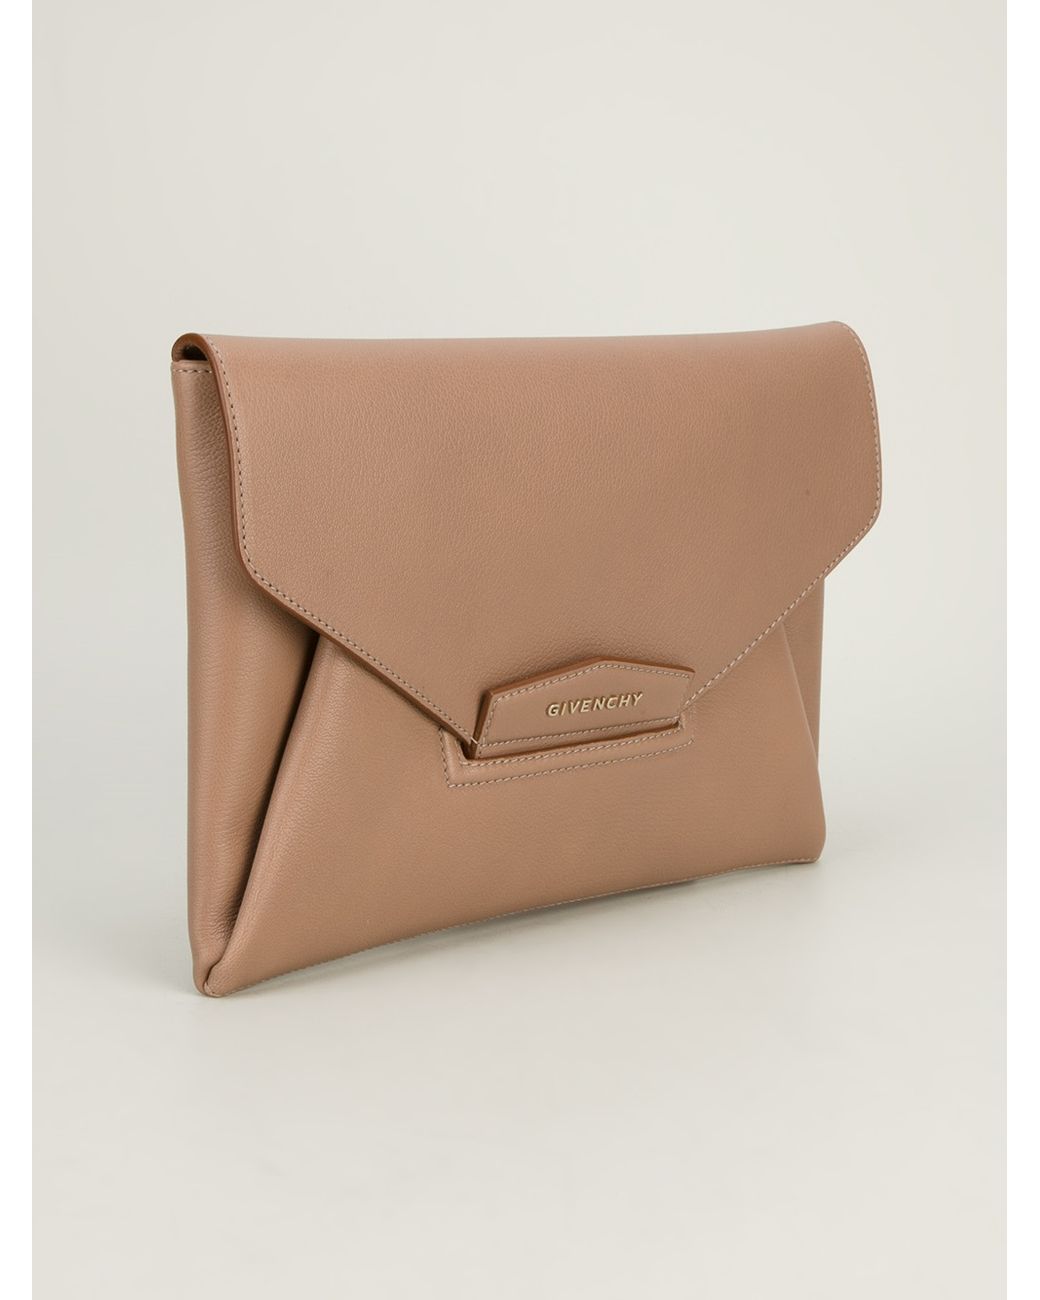 Givenchy Antigona Envelope Clutch in Natural | Lyst